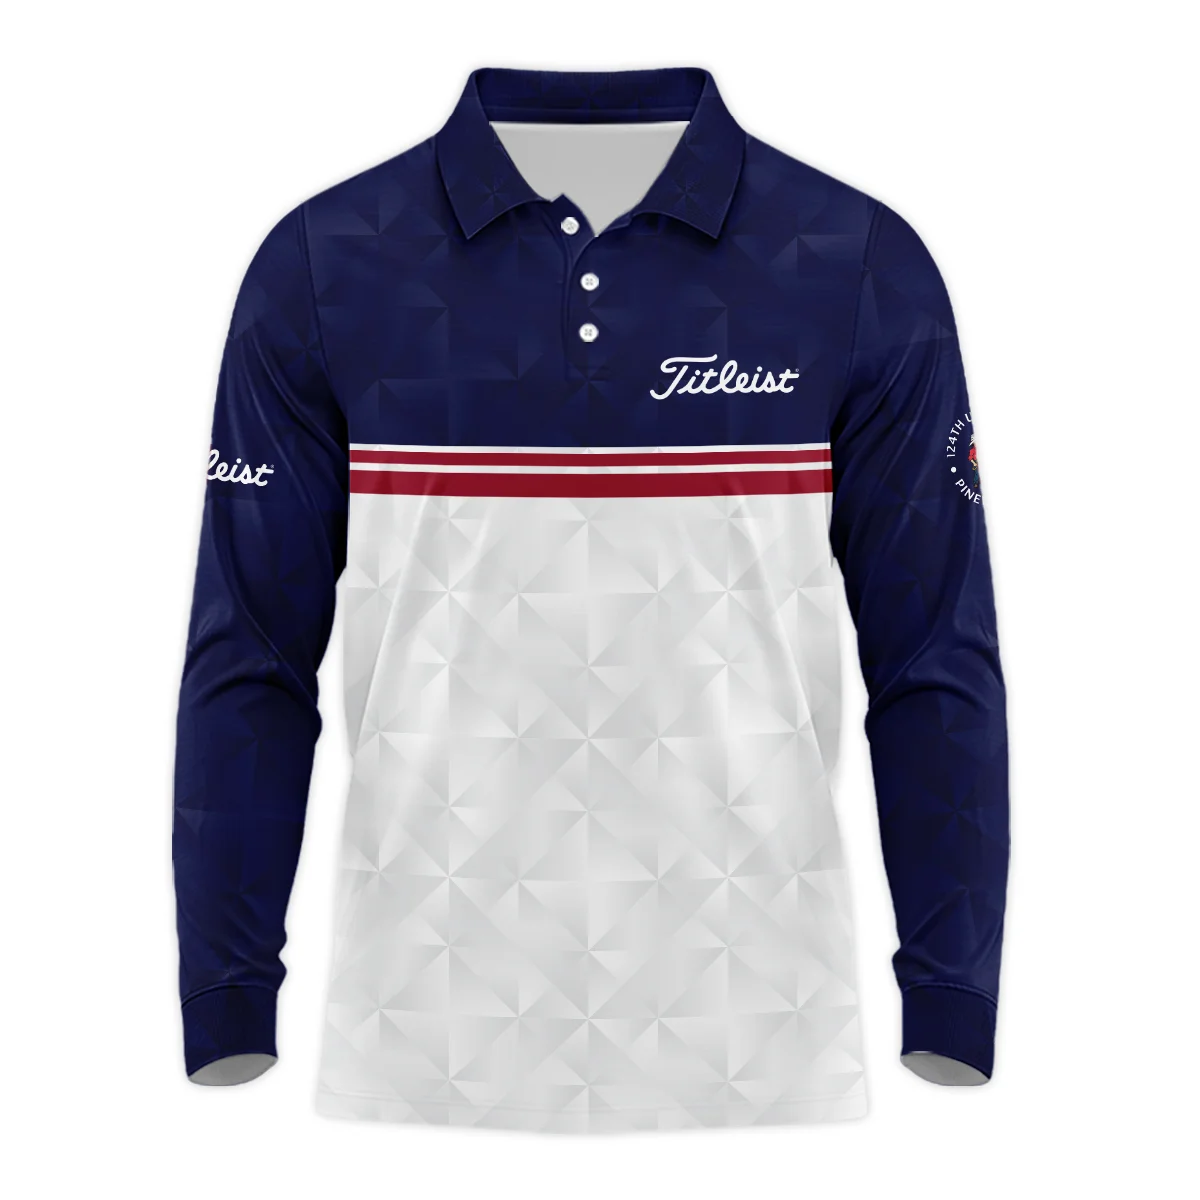 Golf Sport 124th U.S. Open Pinehurst Titleist Unisex Sweatshirt Dark Blue White Abstract Geometric Triangles All Over Print Sweatshirt